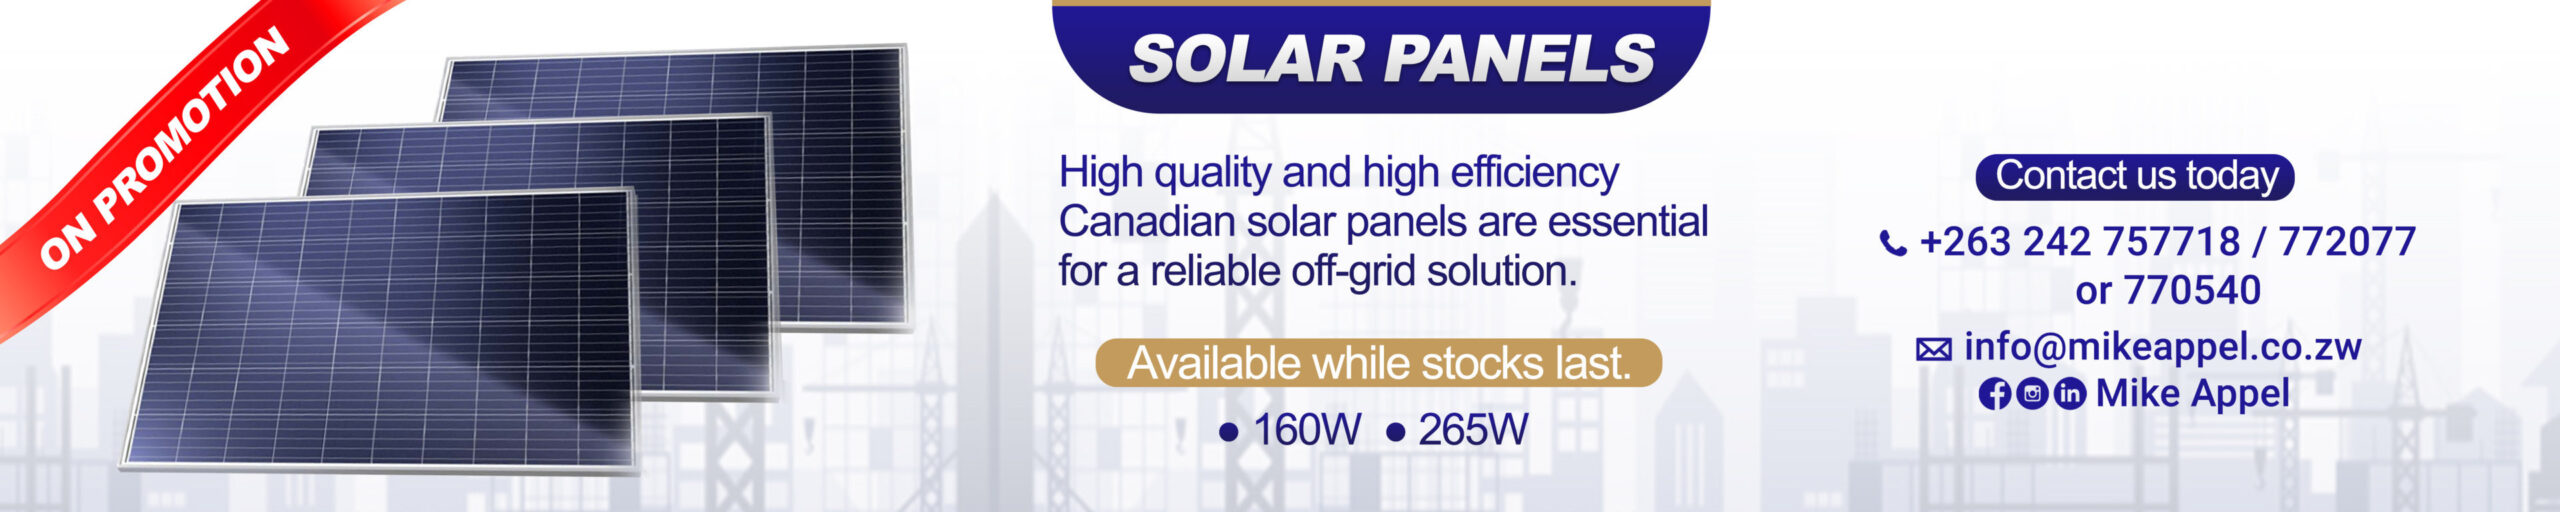 Solar Panels Mike Appel Website-1 (small)